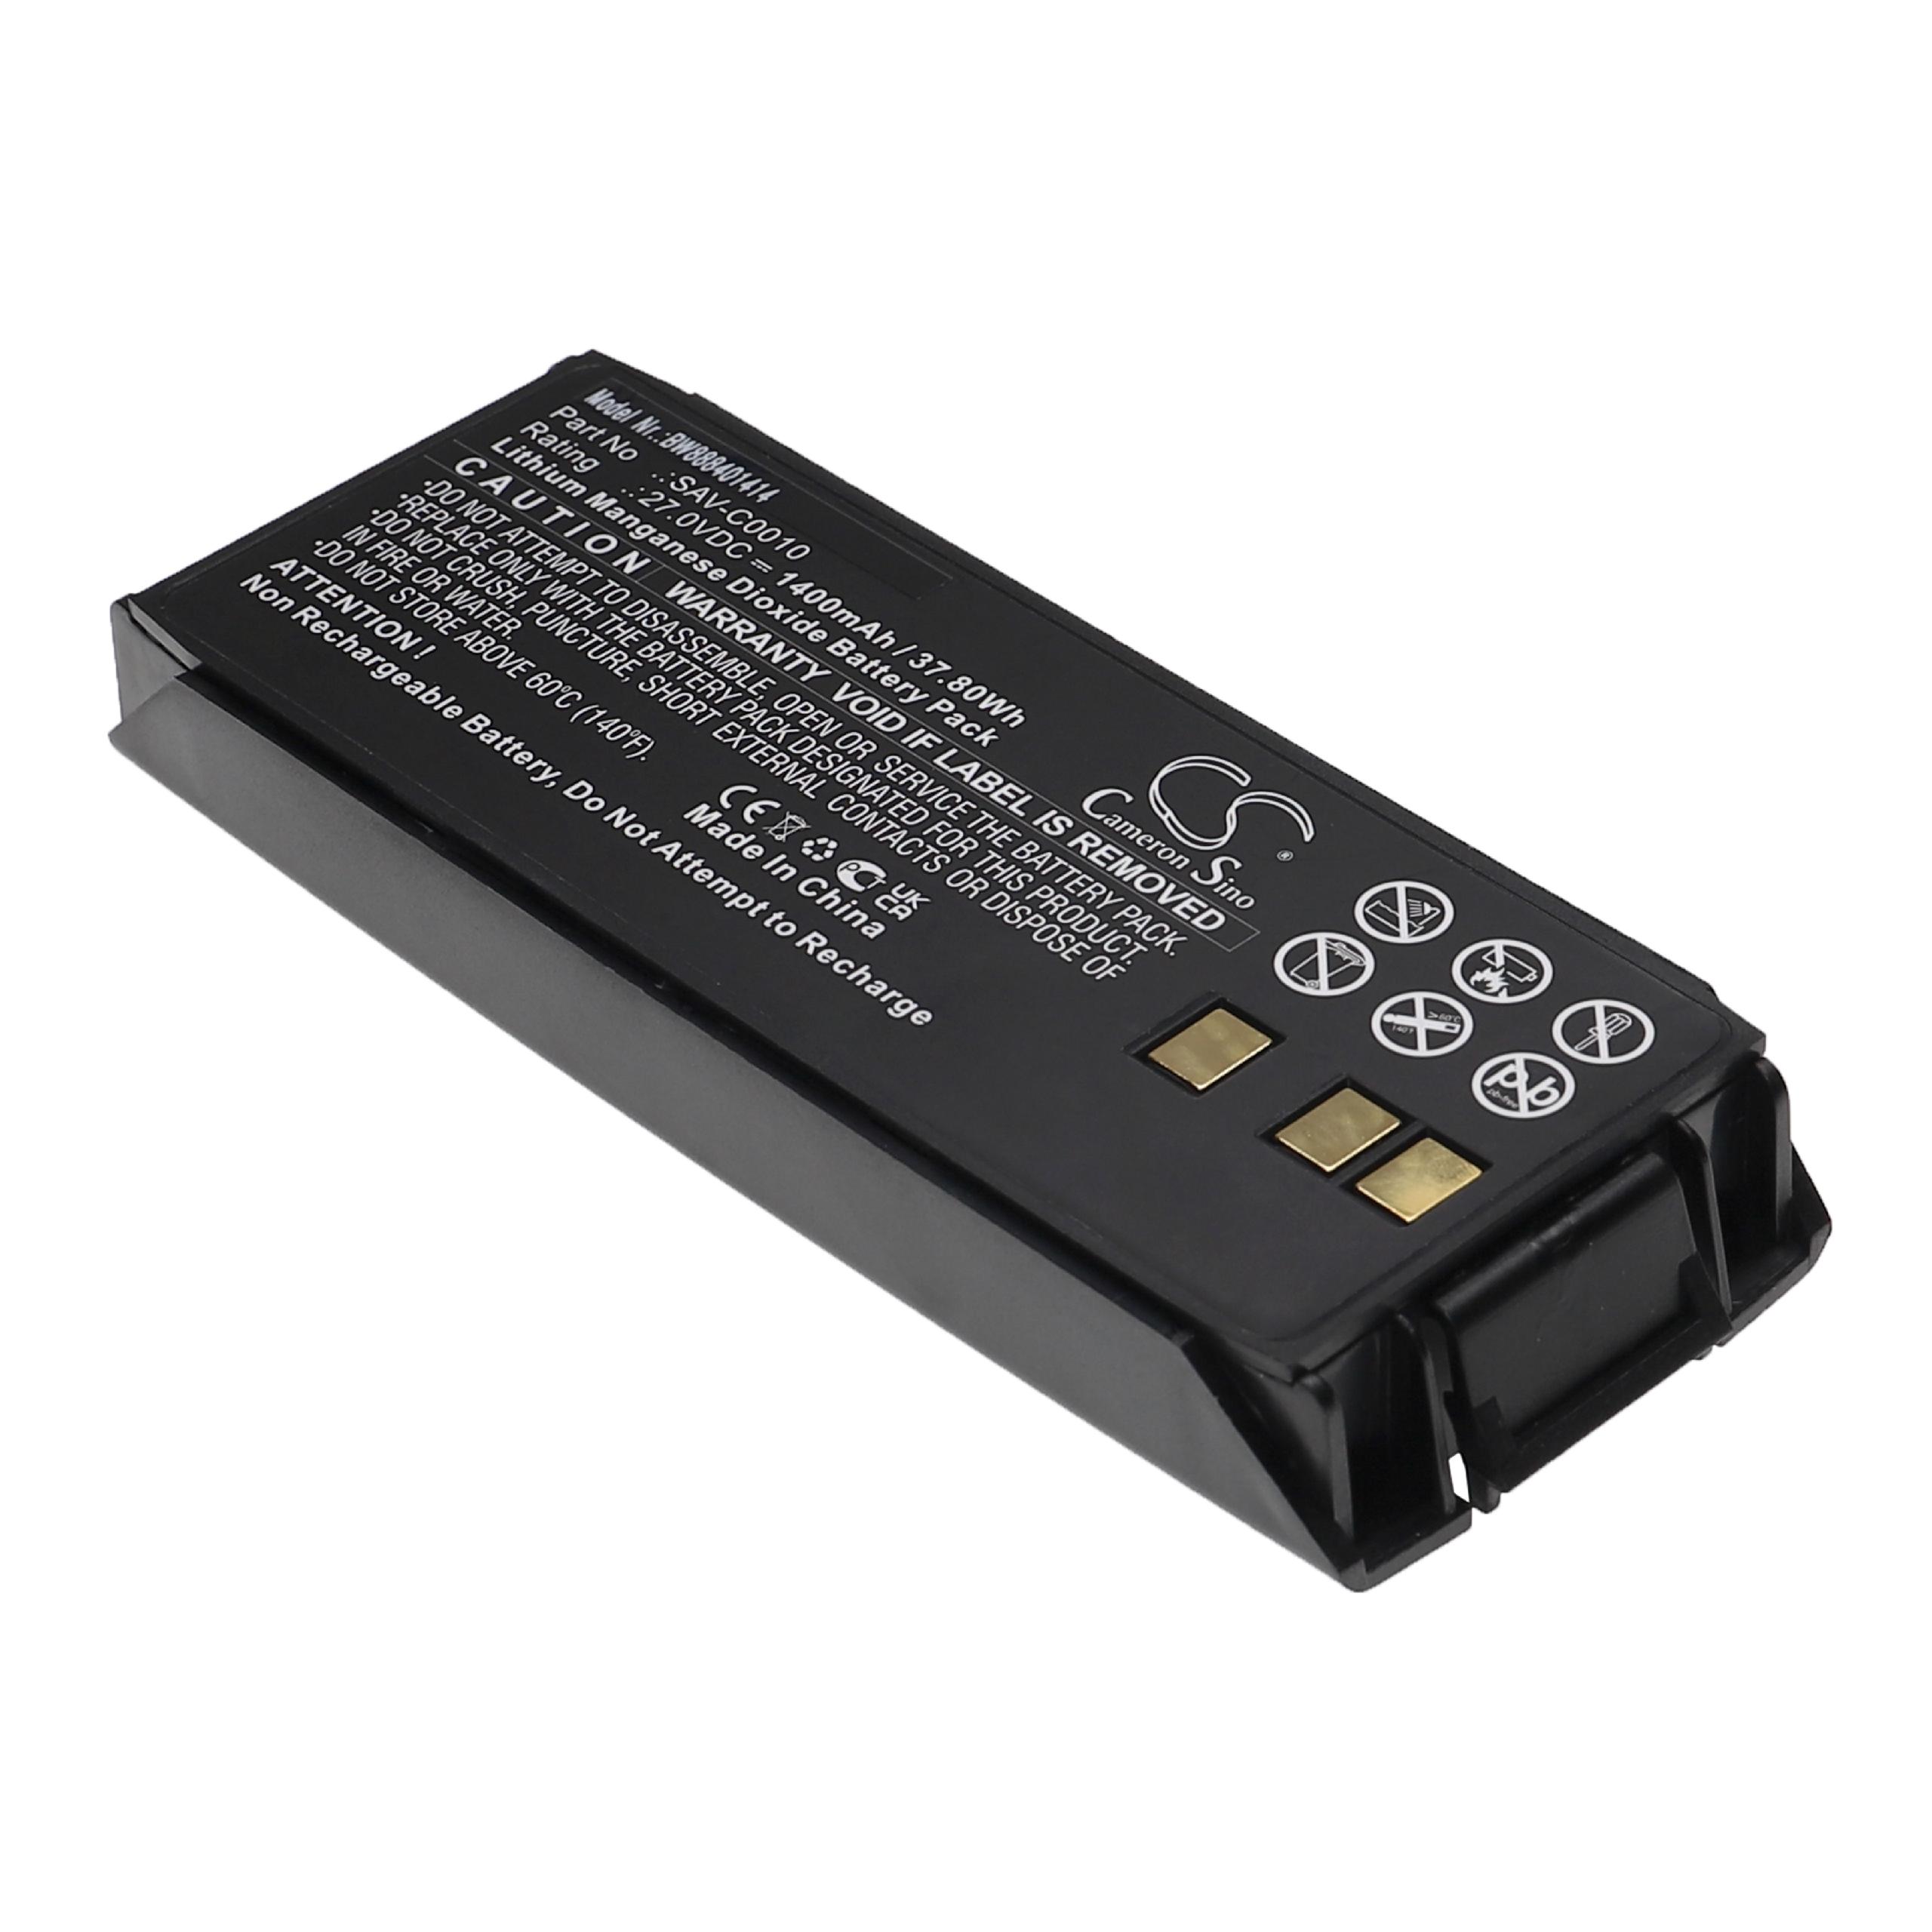 Bateria zamiennik Saver One SAV-C0010 - 1400 mAh 27 V Li-MnO2